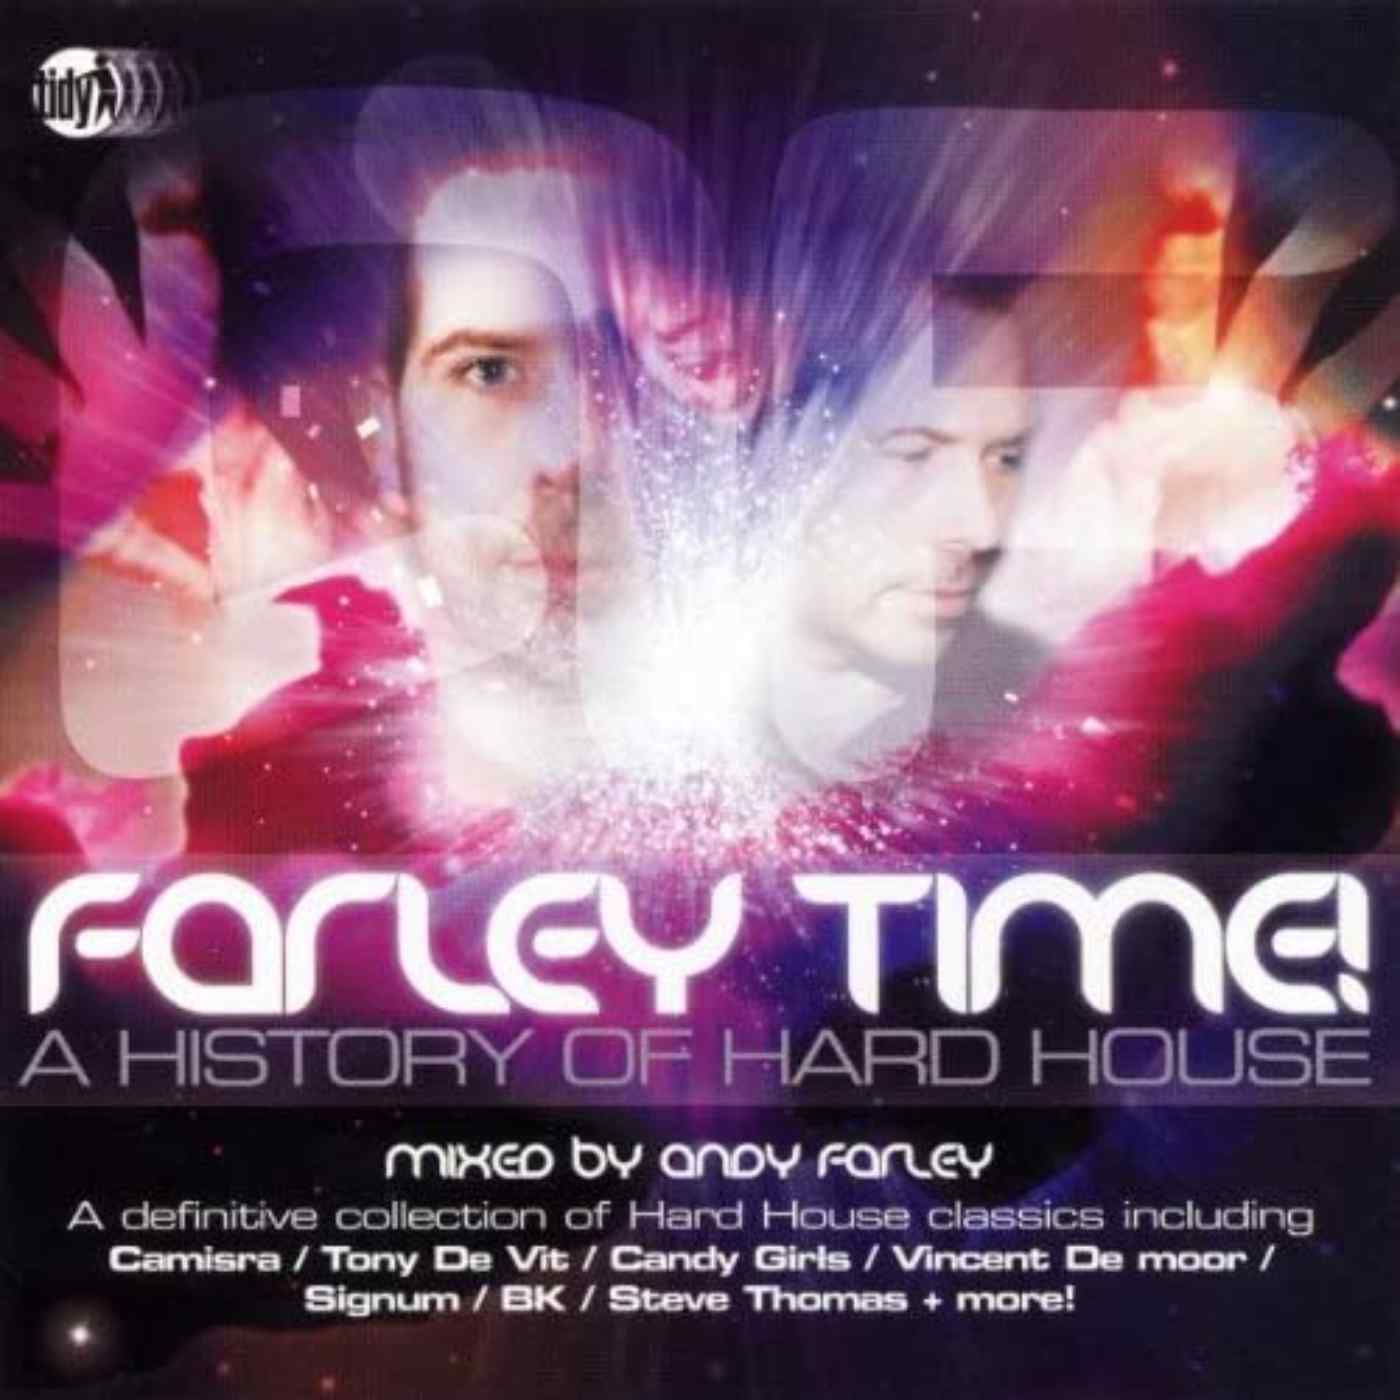 Farleytime - A History Of Hard House - Andy Farley